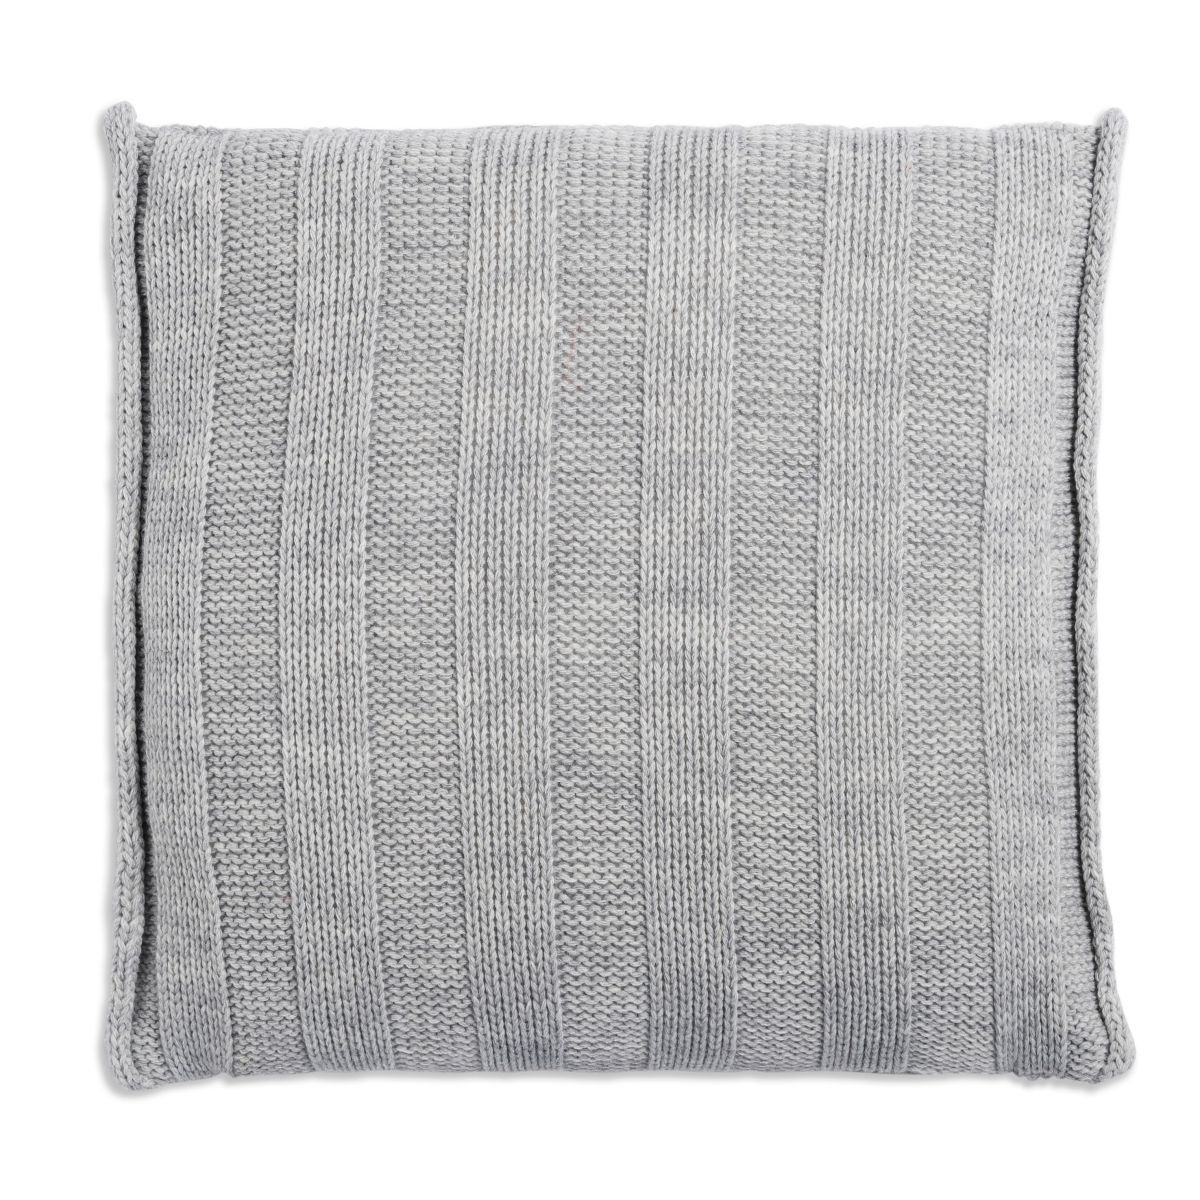 jesse cushion light grey 50x50